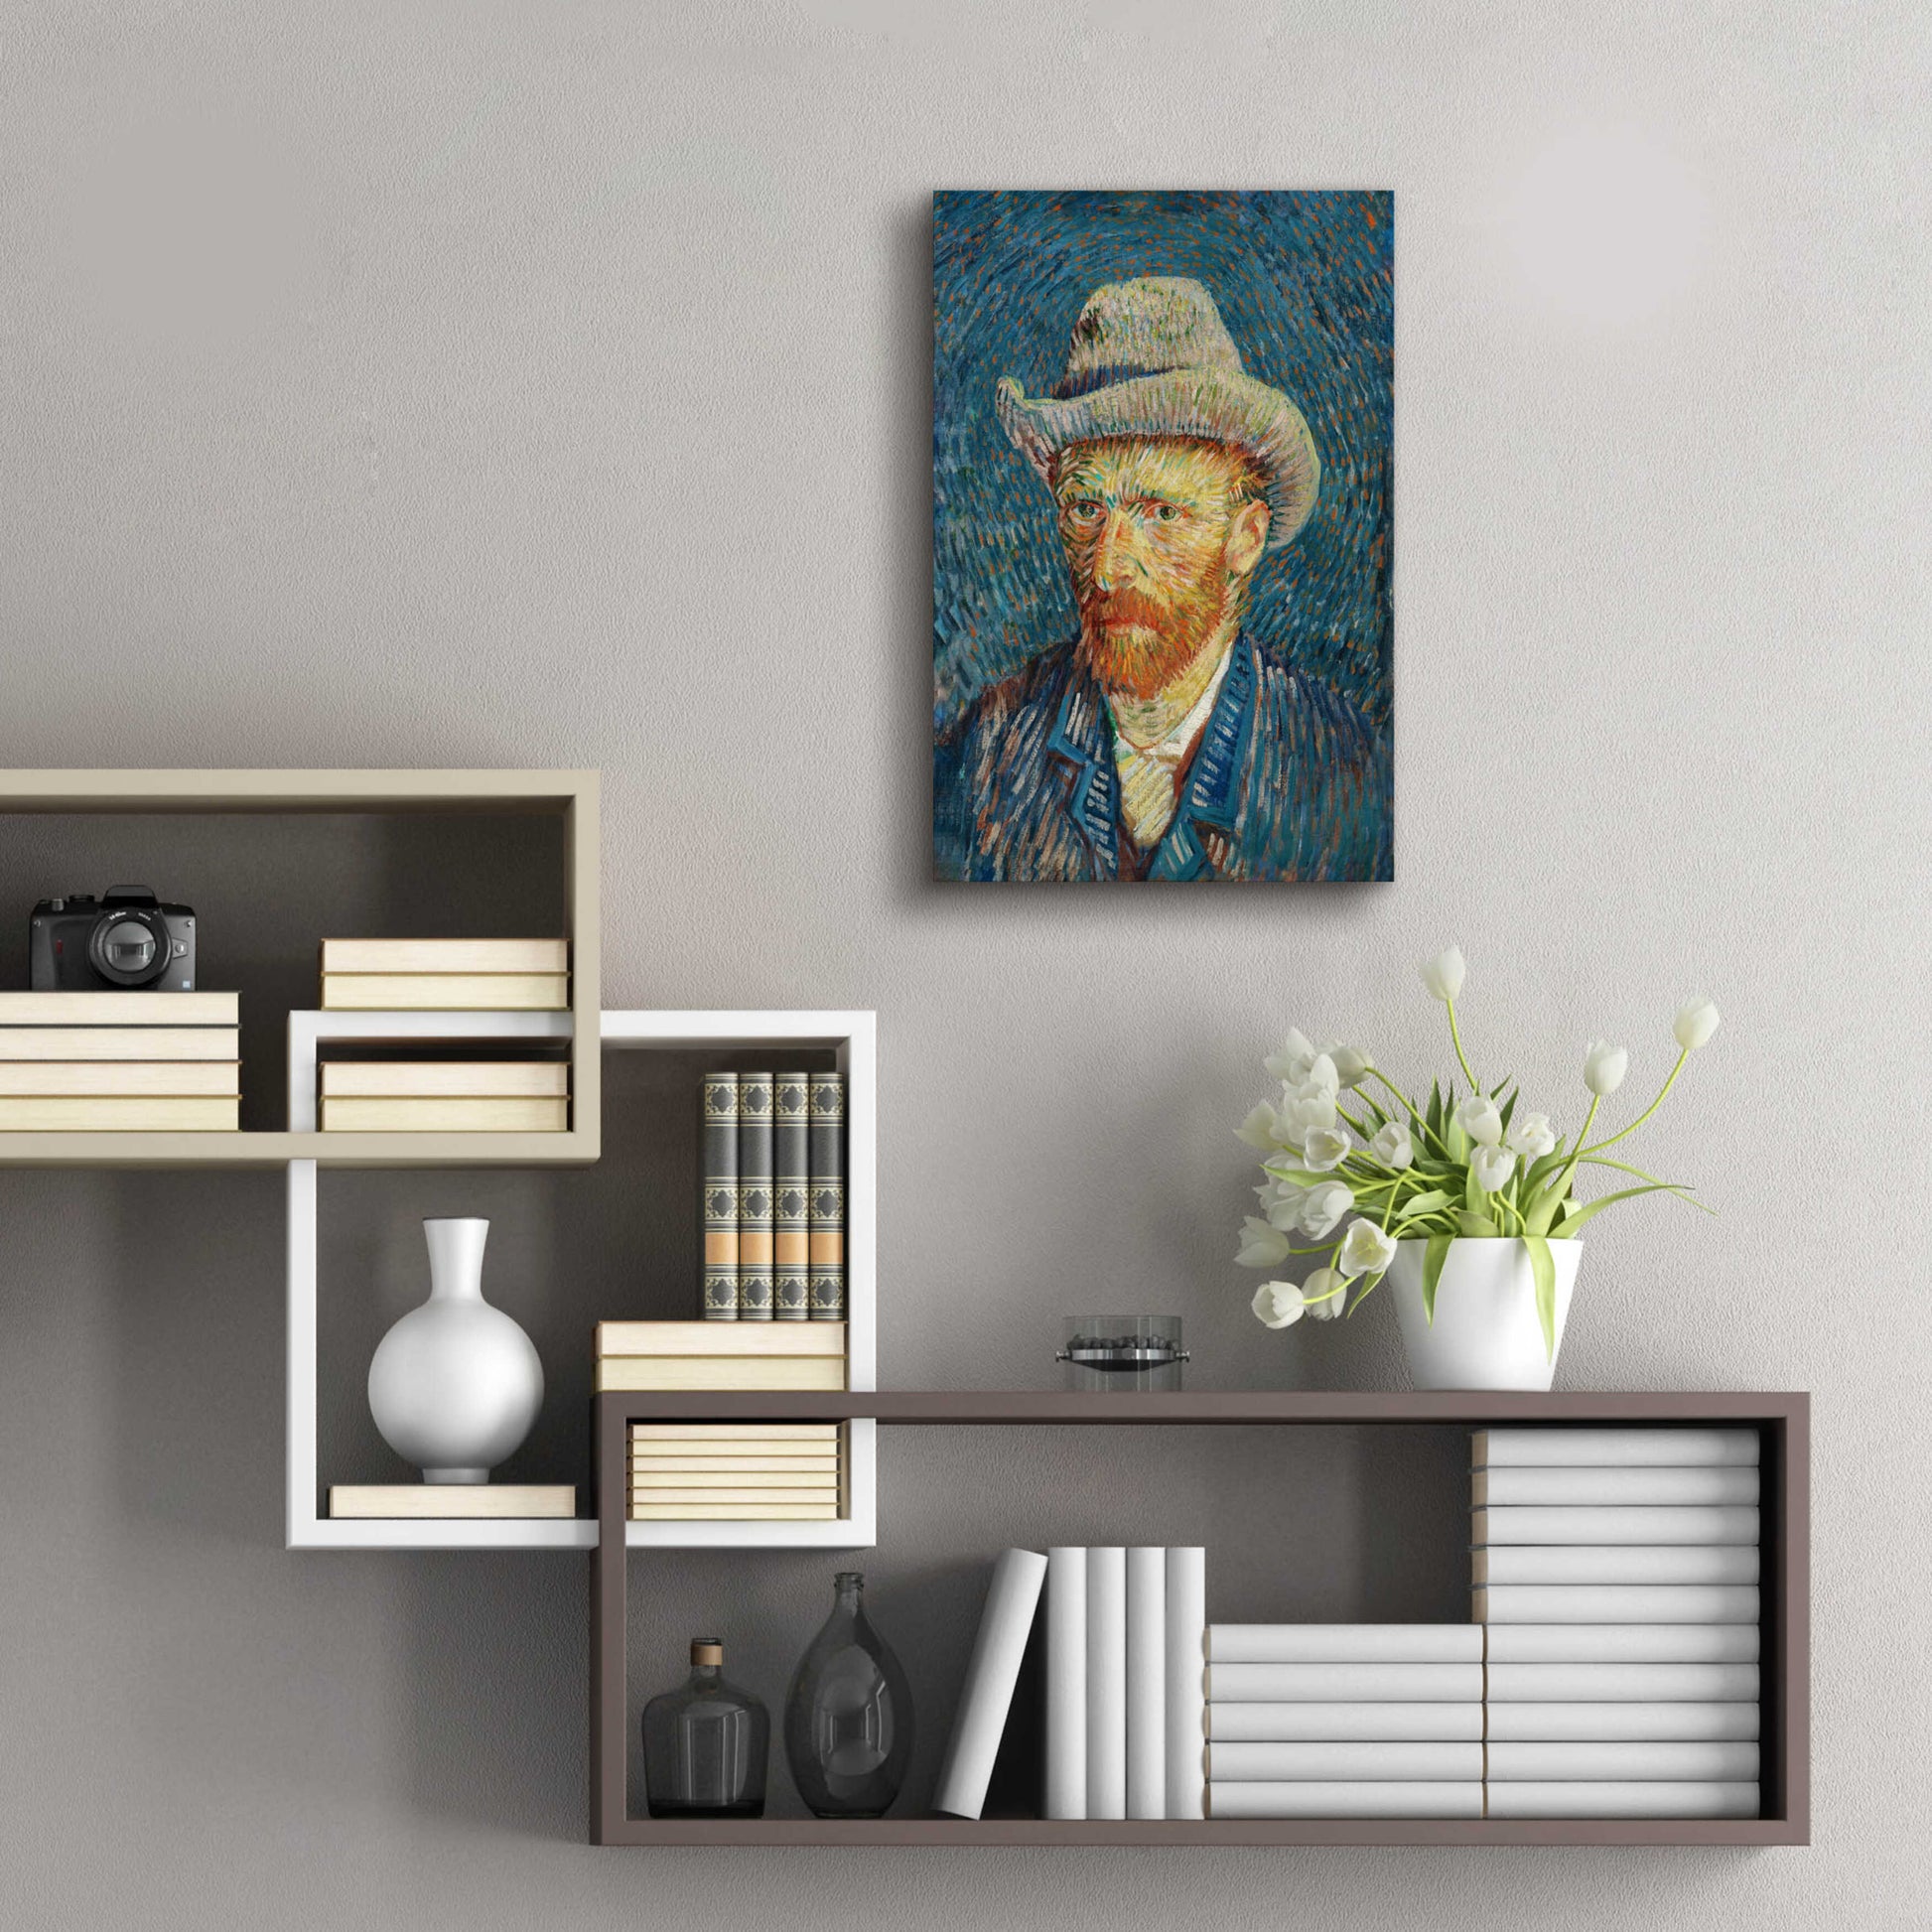 Epic Art 'Self-Portrait With Grey Felt Hat' by Vincent Van Gogh, Acrylic Glass Wall Art,16x24